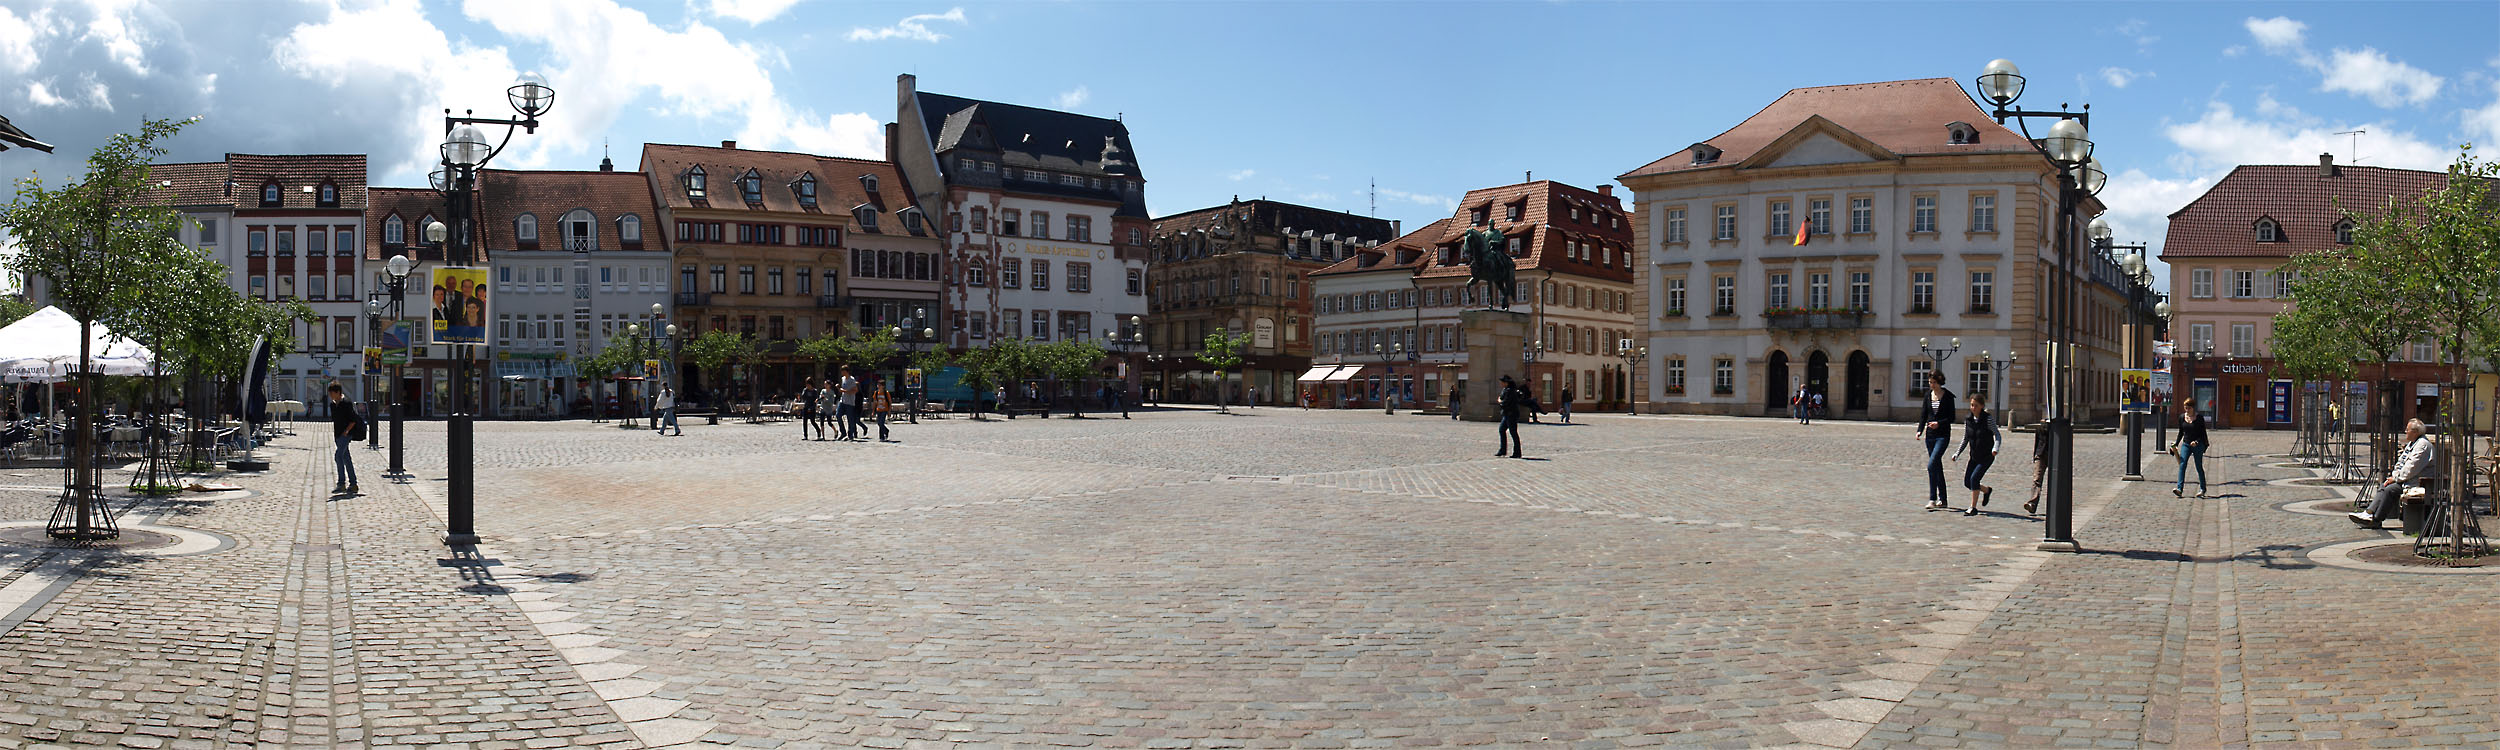 Landau-Rathausplatz-03.jpg